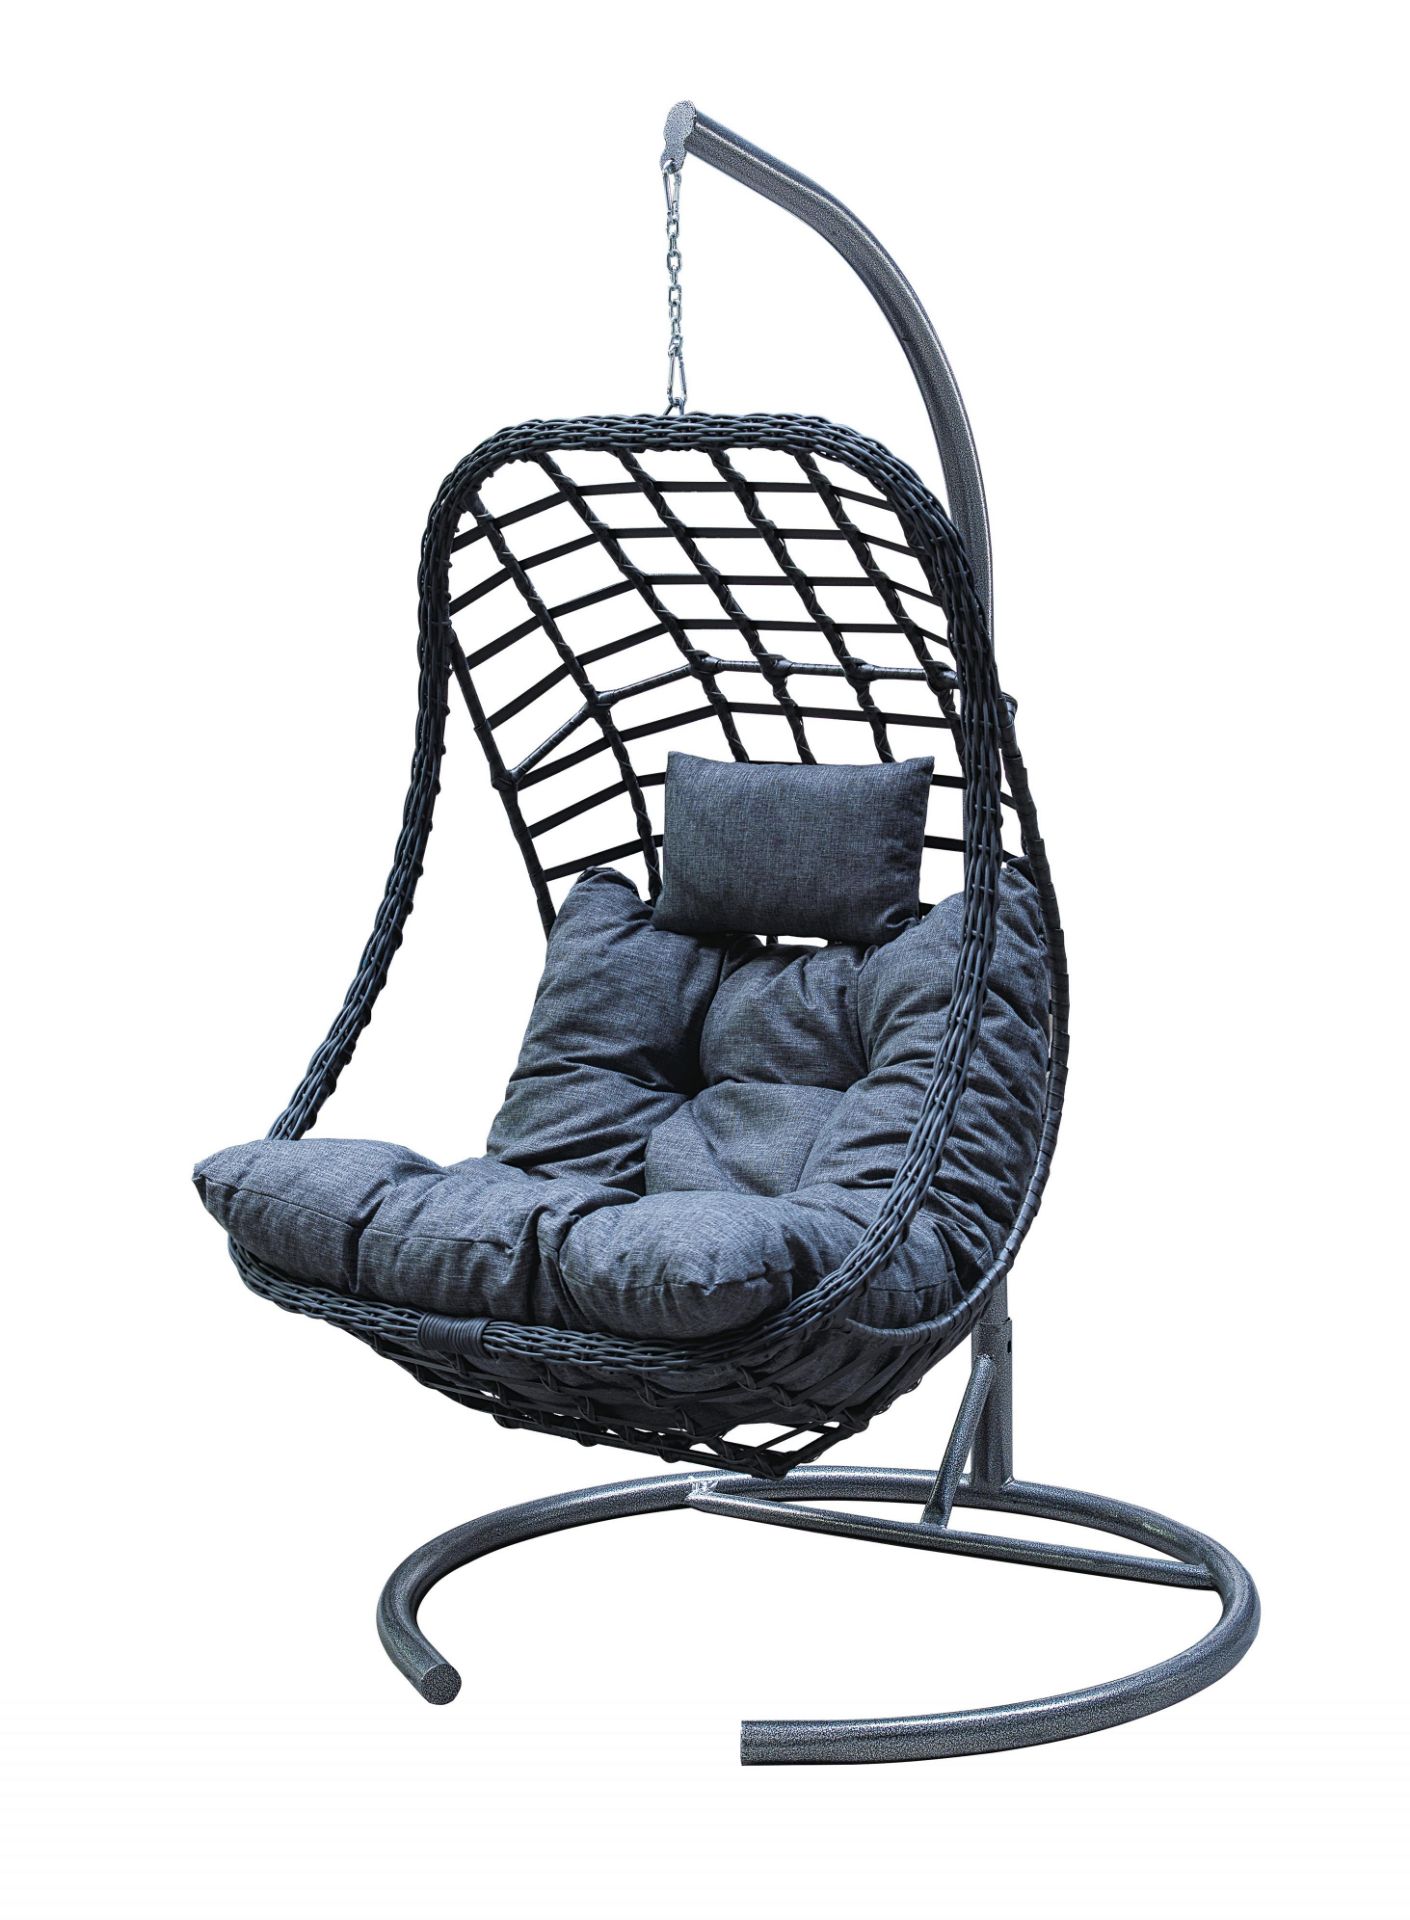 + VAT Brand New SRP £379.99 The Chelsea Garden Co "St Tropez" Luxury Rattan Grey Large Swing Chair -